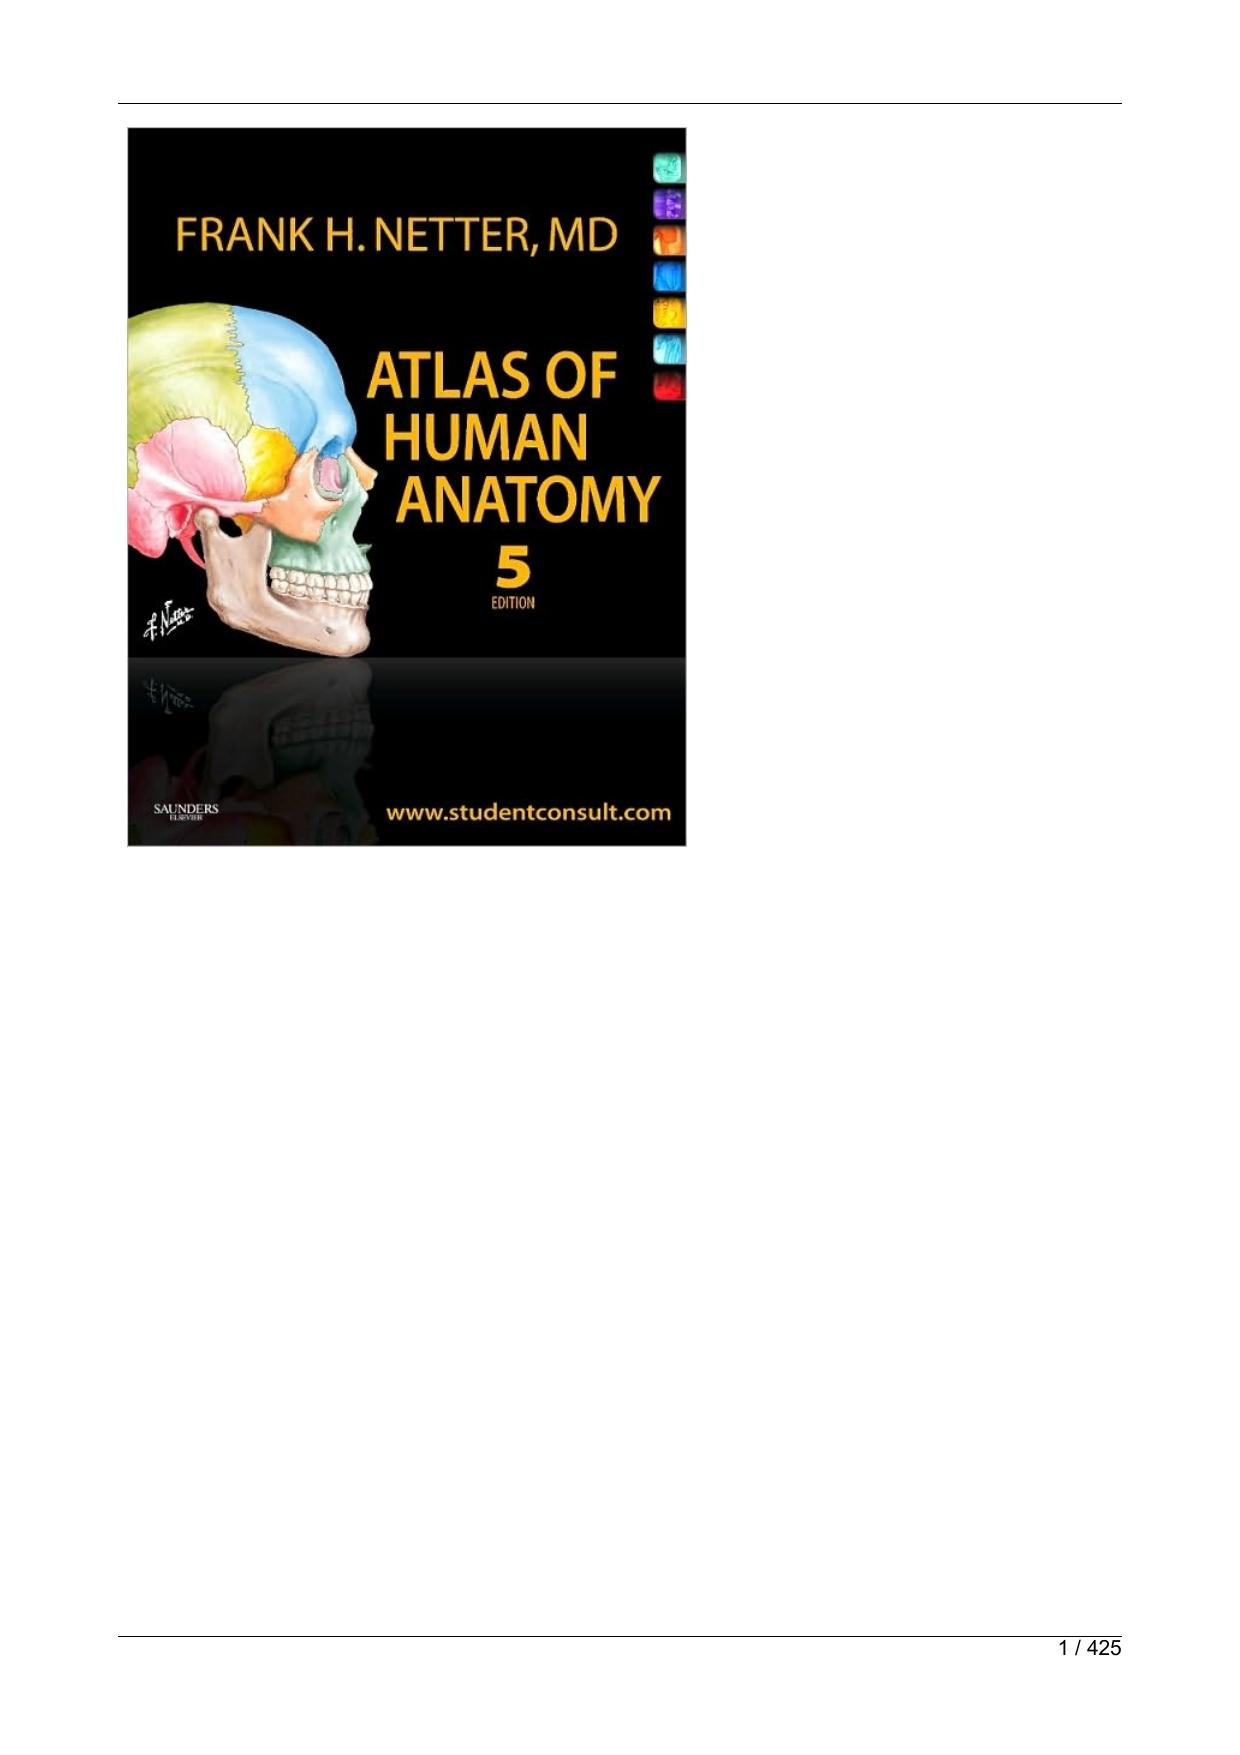 Atlas of Human Anatomy by Netter 5th ed ( PDFDrive.com )